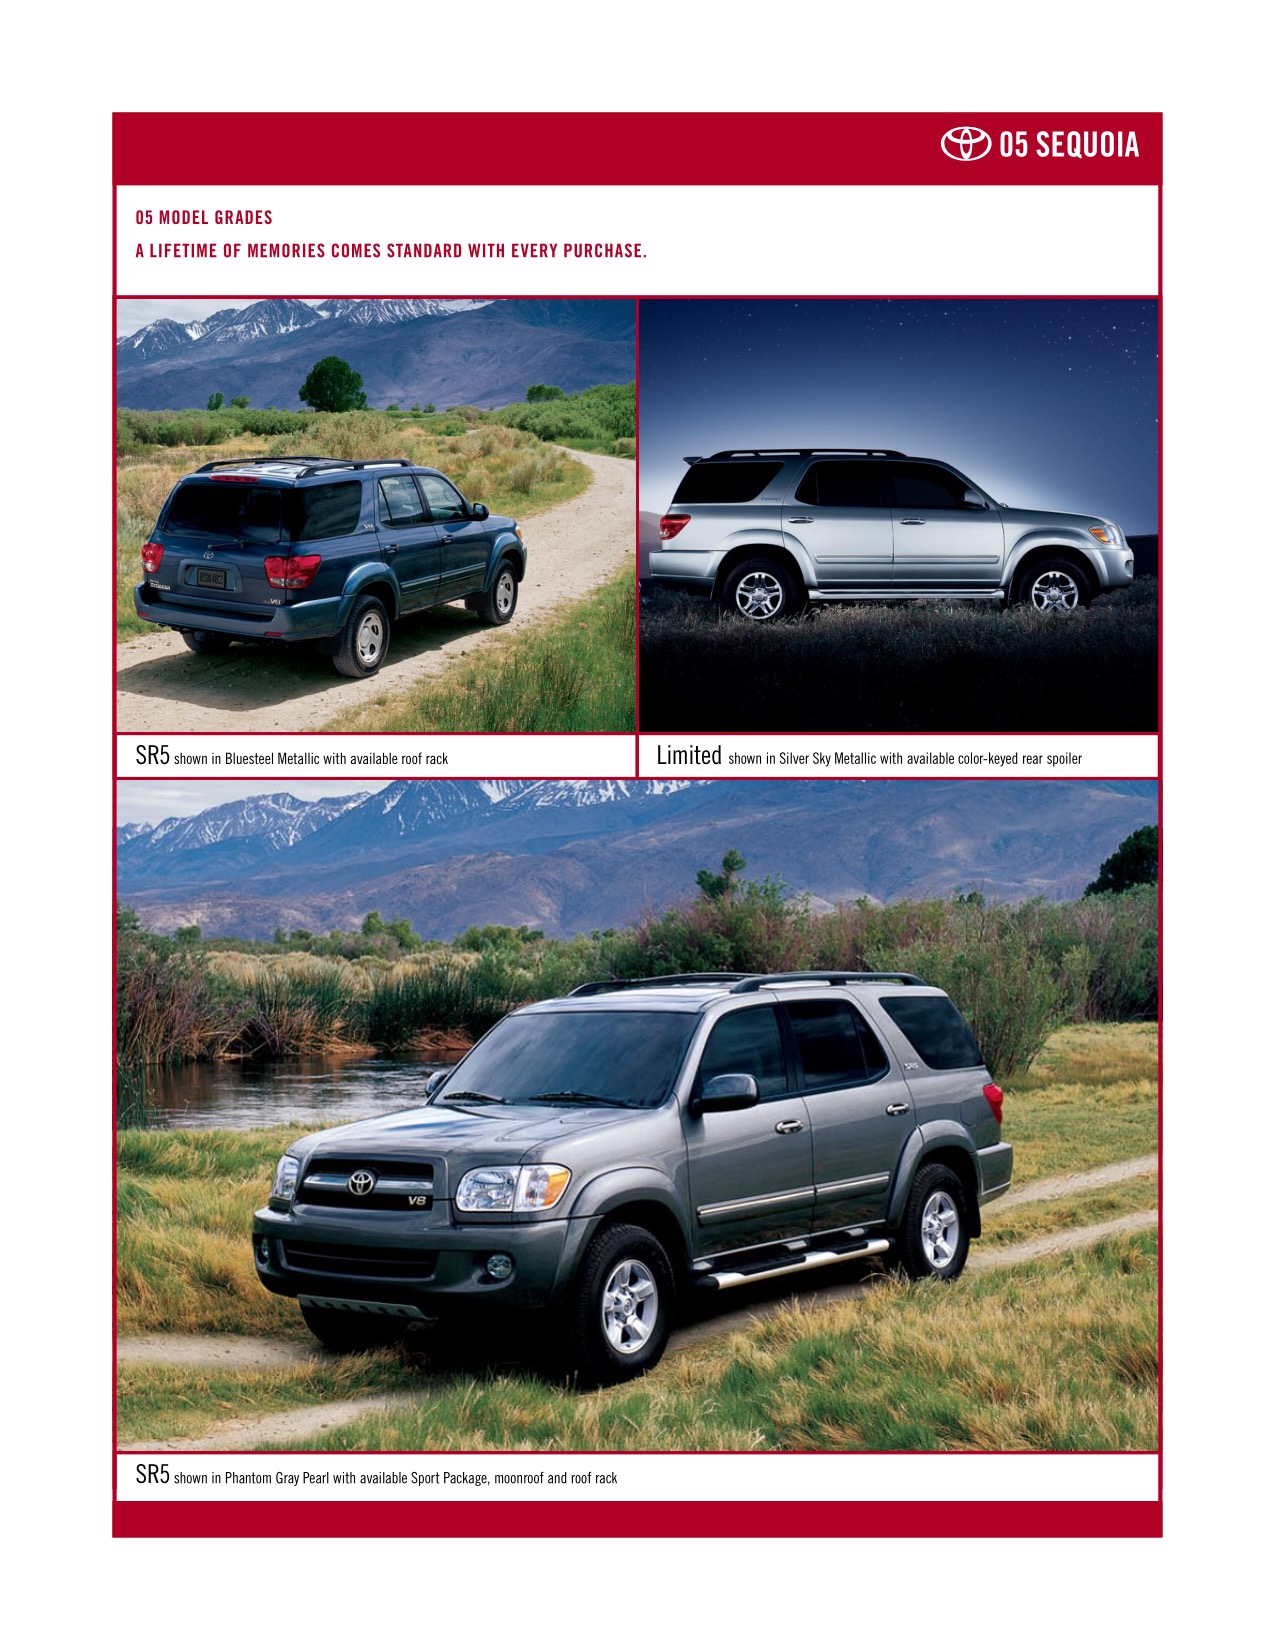 2005 Toyota Sequoia Brochure